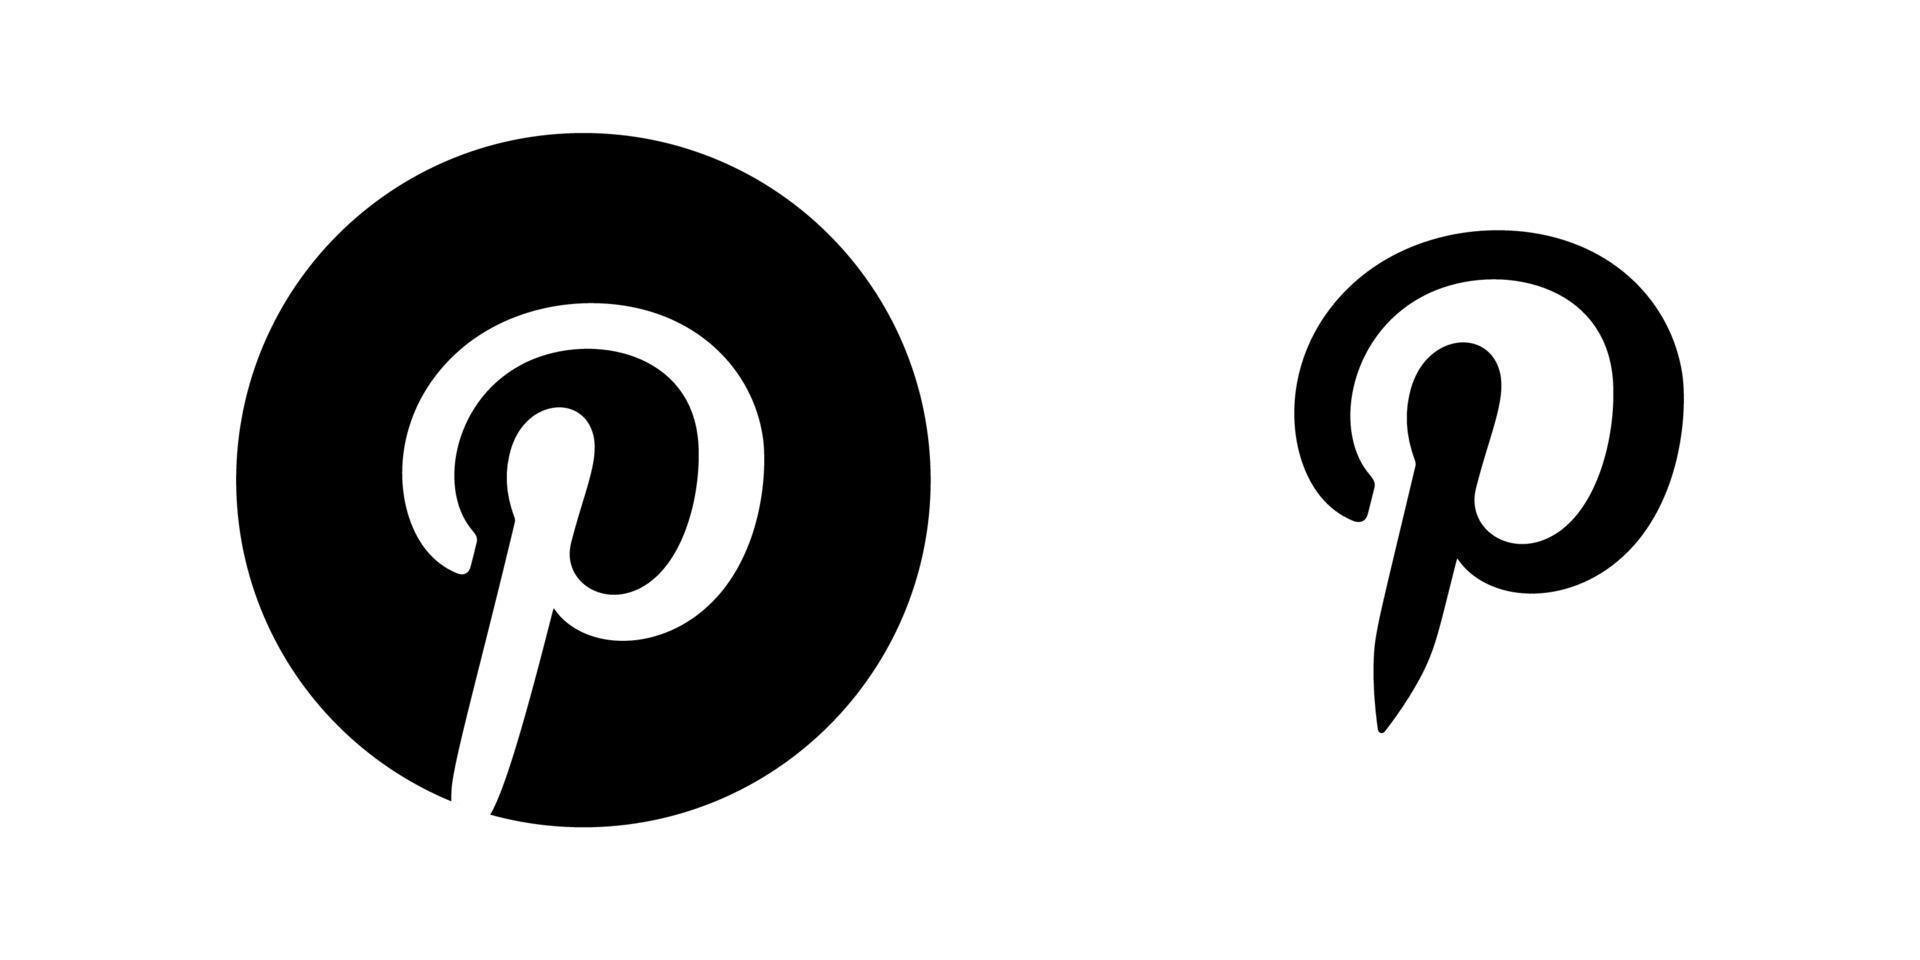 vector de logotipo de pinterest negro, símbolo de pinterest, icono de pinterest vector libre